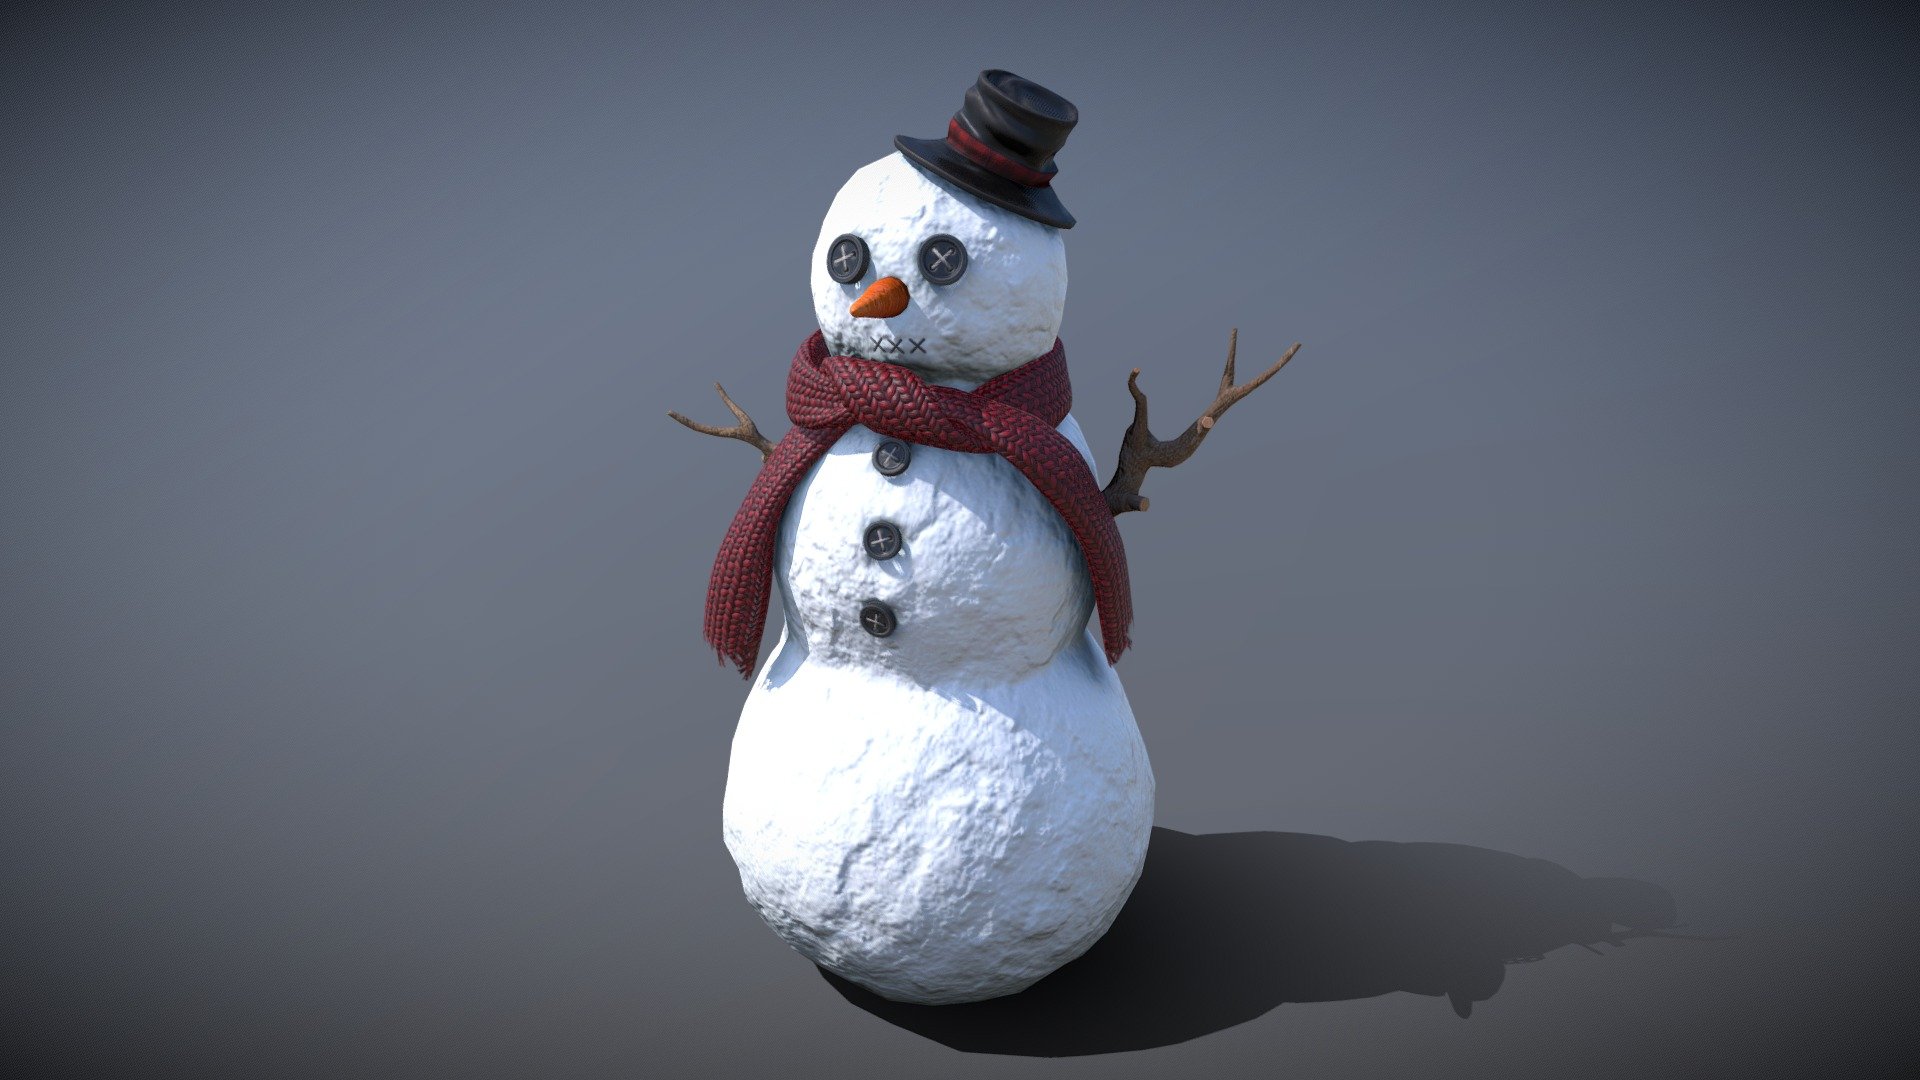 Snowman - Снеговик
Low poly Snowman for game and mods

Autors: Kirill Komarov, Evgeniy Komarov

komarovs_mappers@mail.ru - Snowman - 3D model by komarovs_mappers 3d model